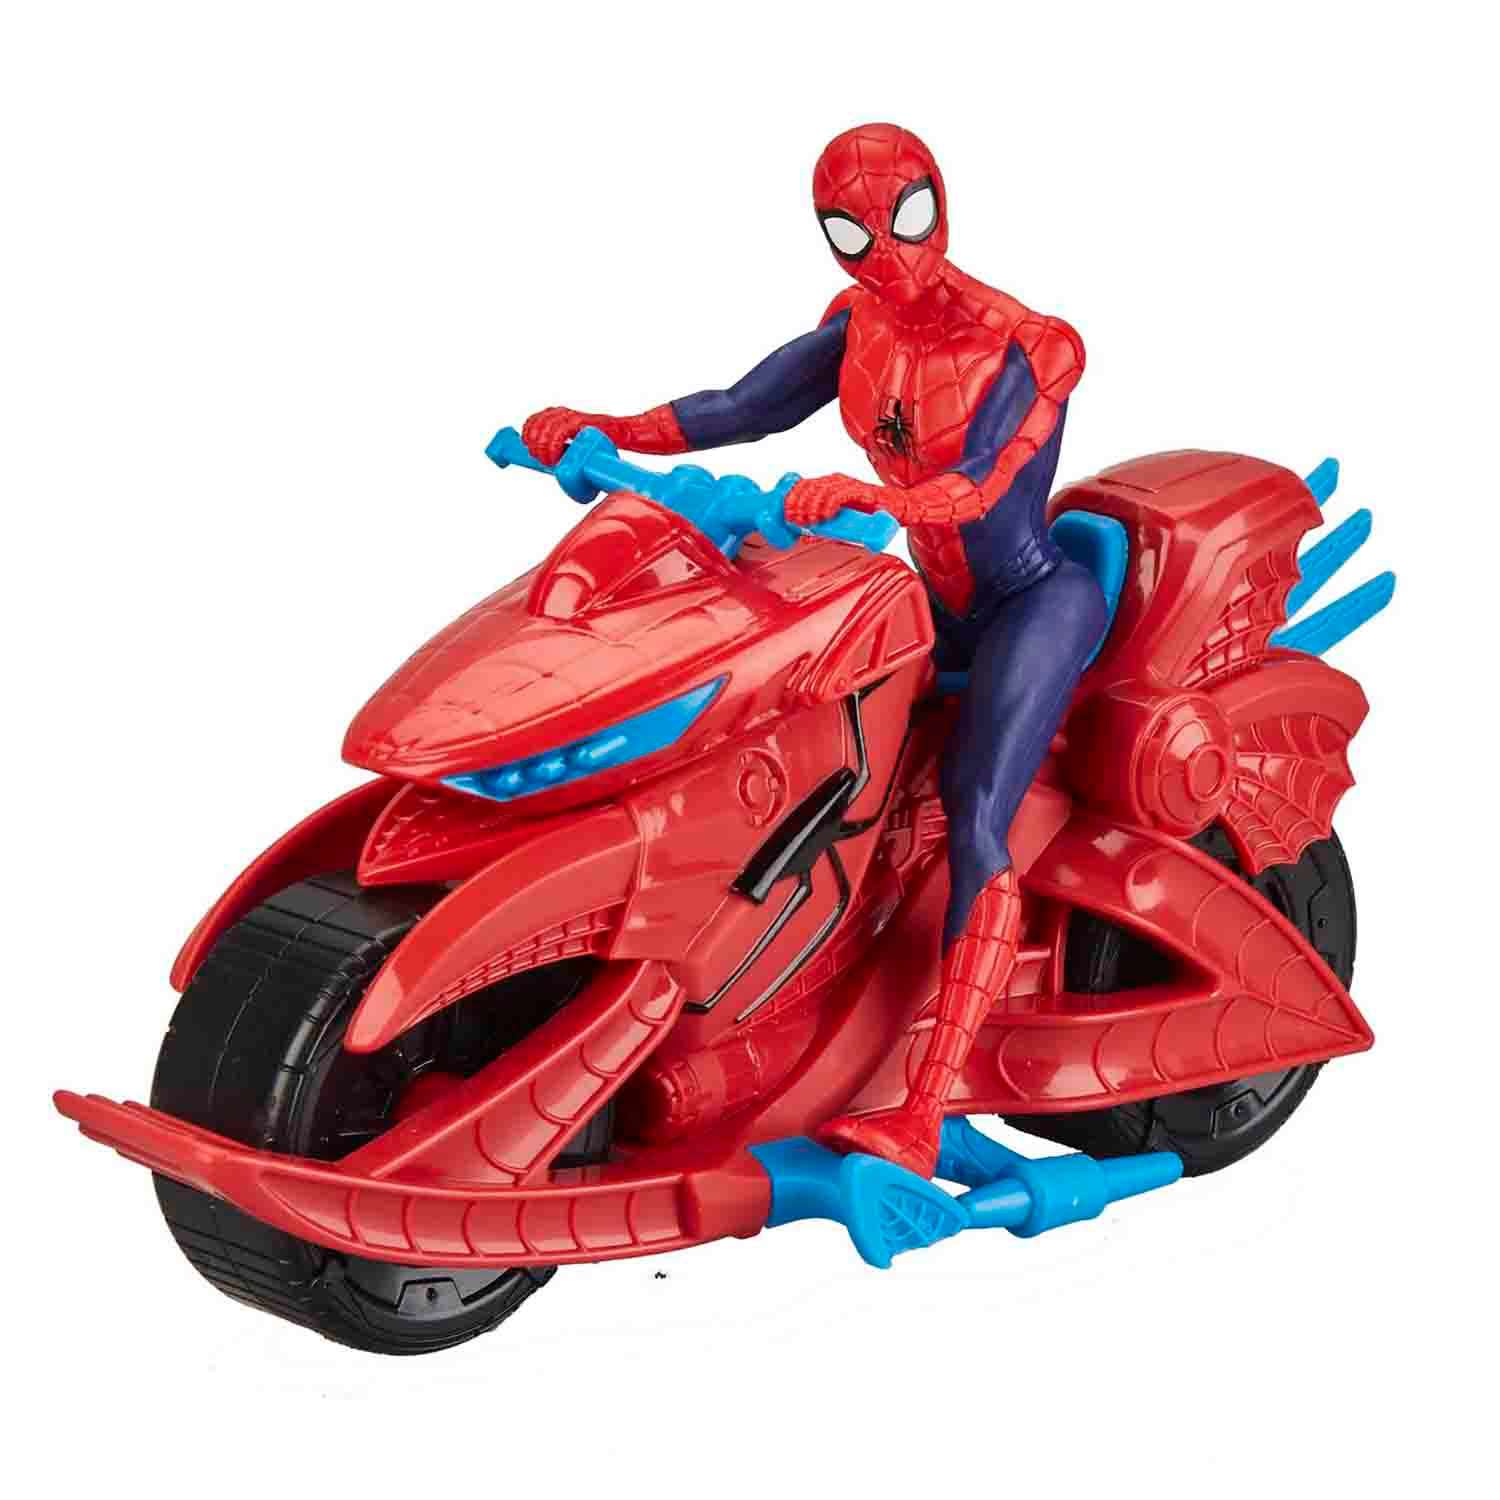 Фигурка Человек-Паук (Spider-man) Человек-паук с транспортом E3368EU4 - фото 1